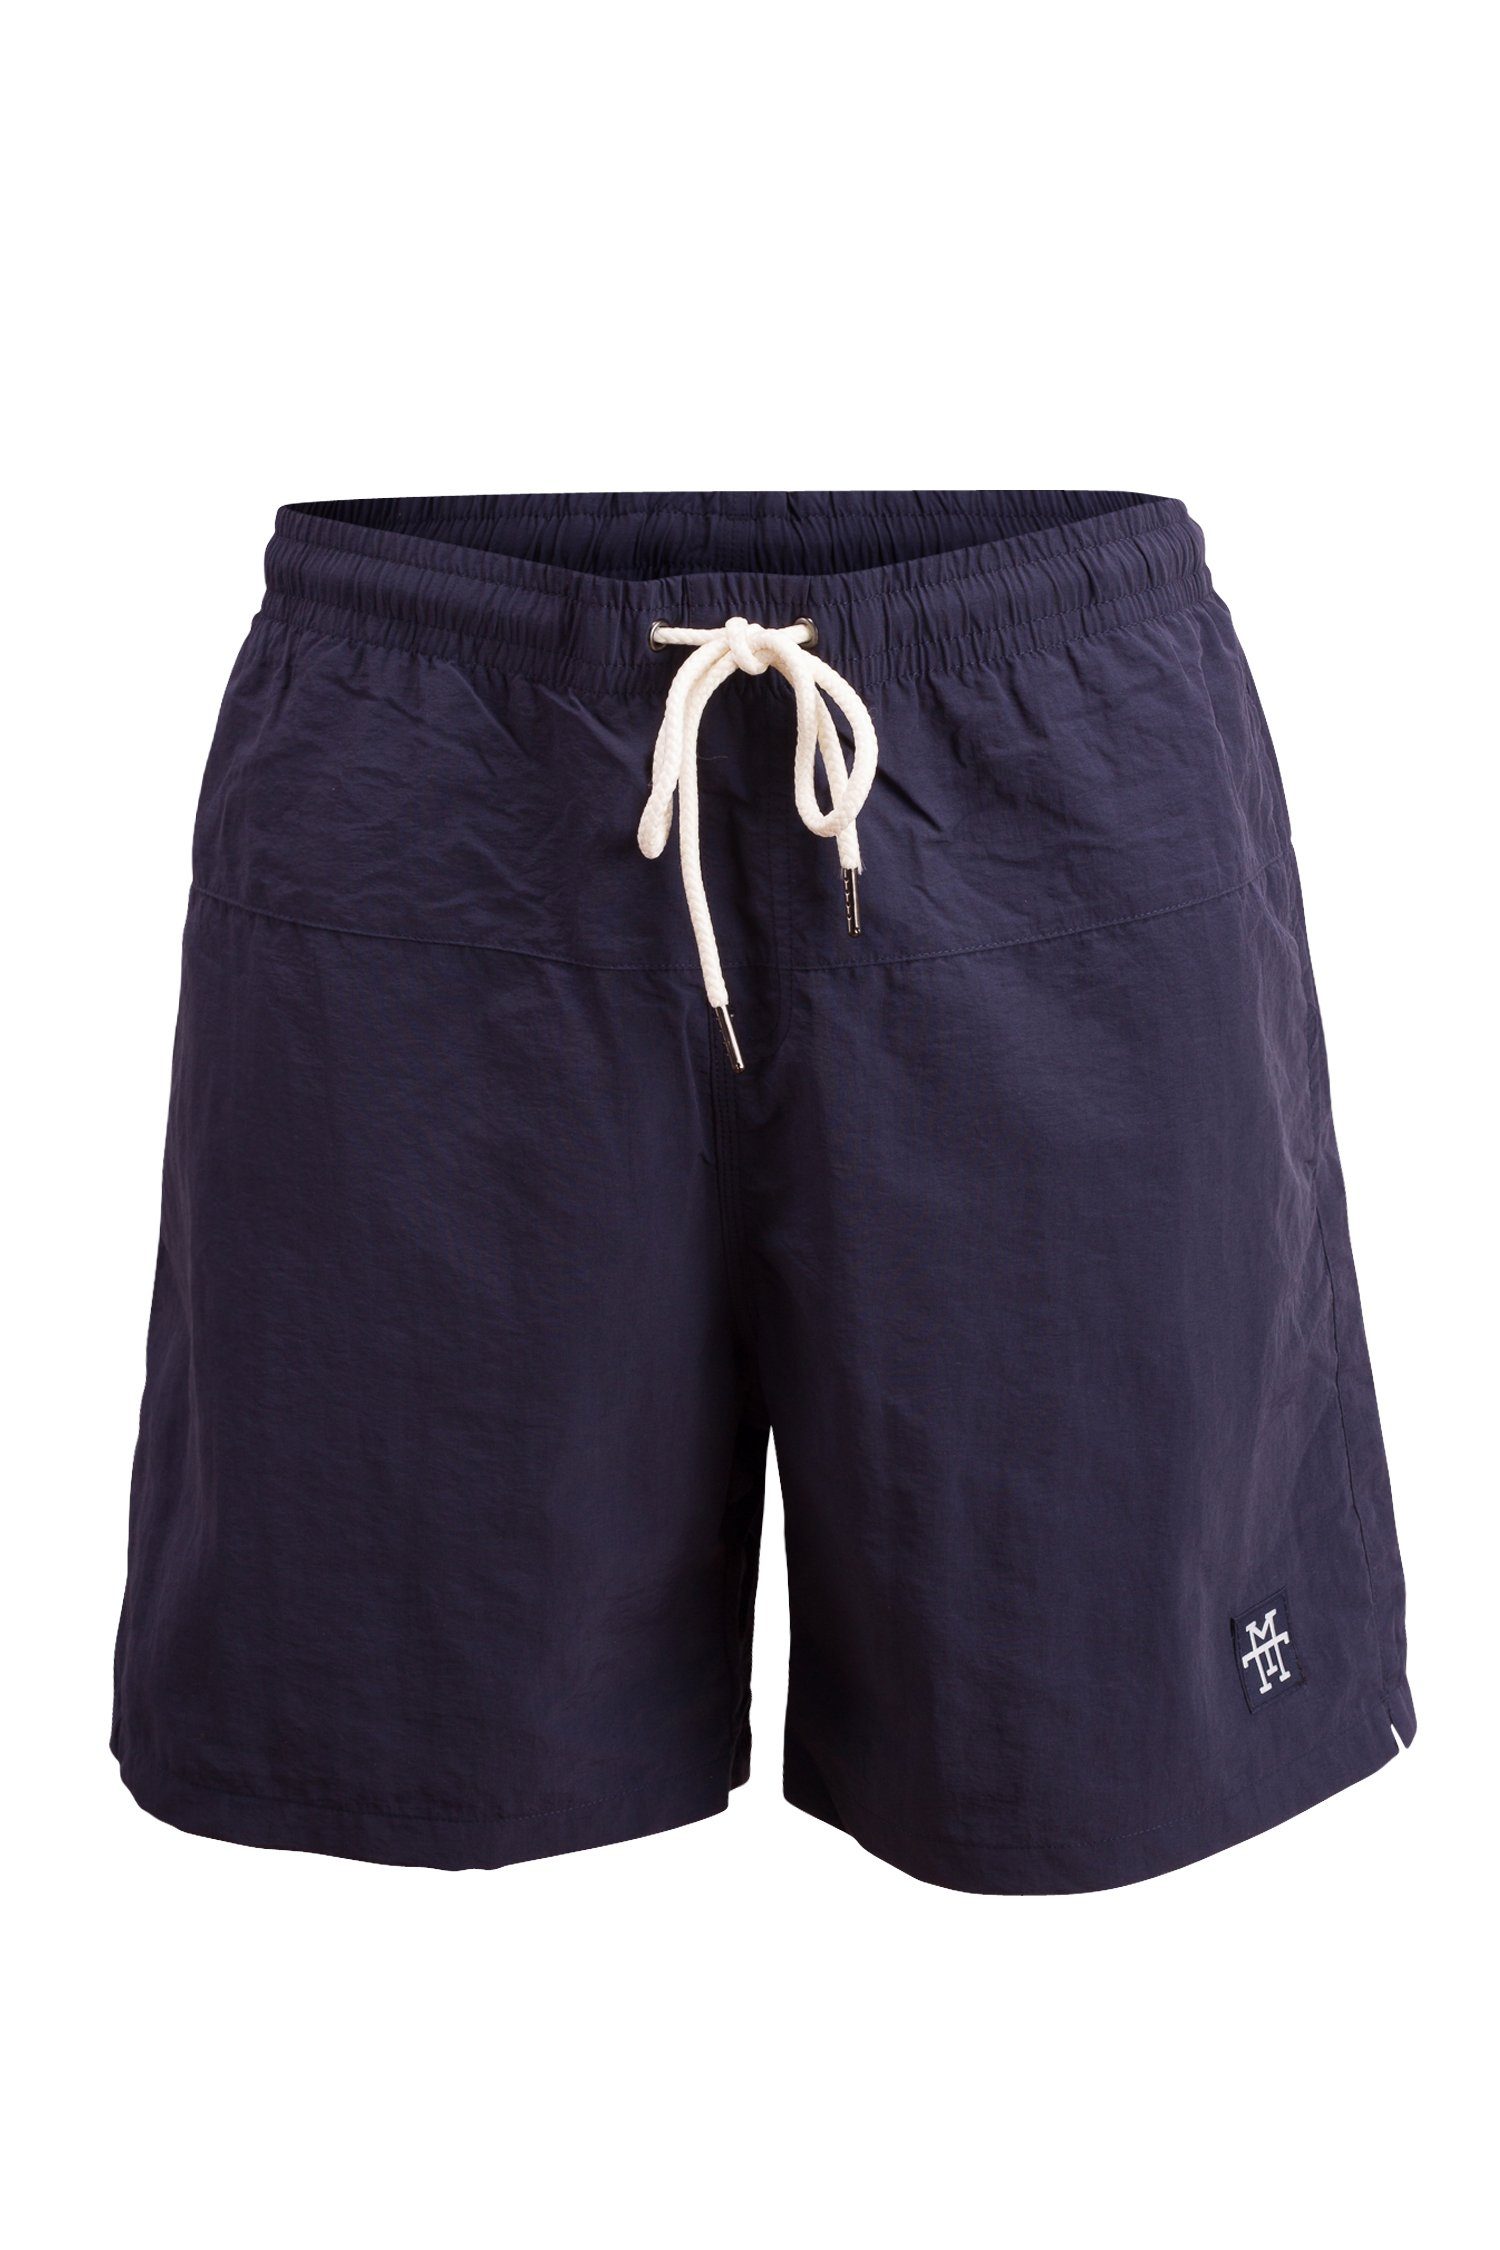 Badehosen Navy Manufaktur13 Shorts Badeshorts schnelltrocknend - Swim